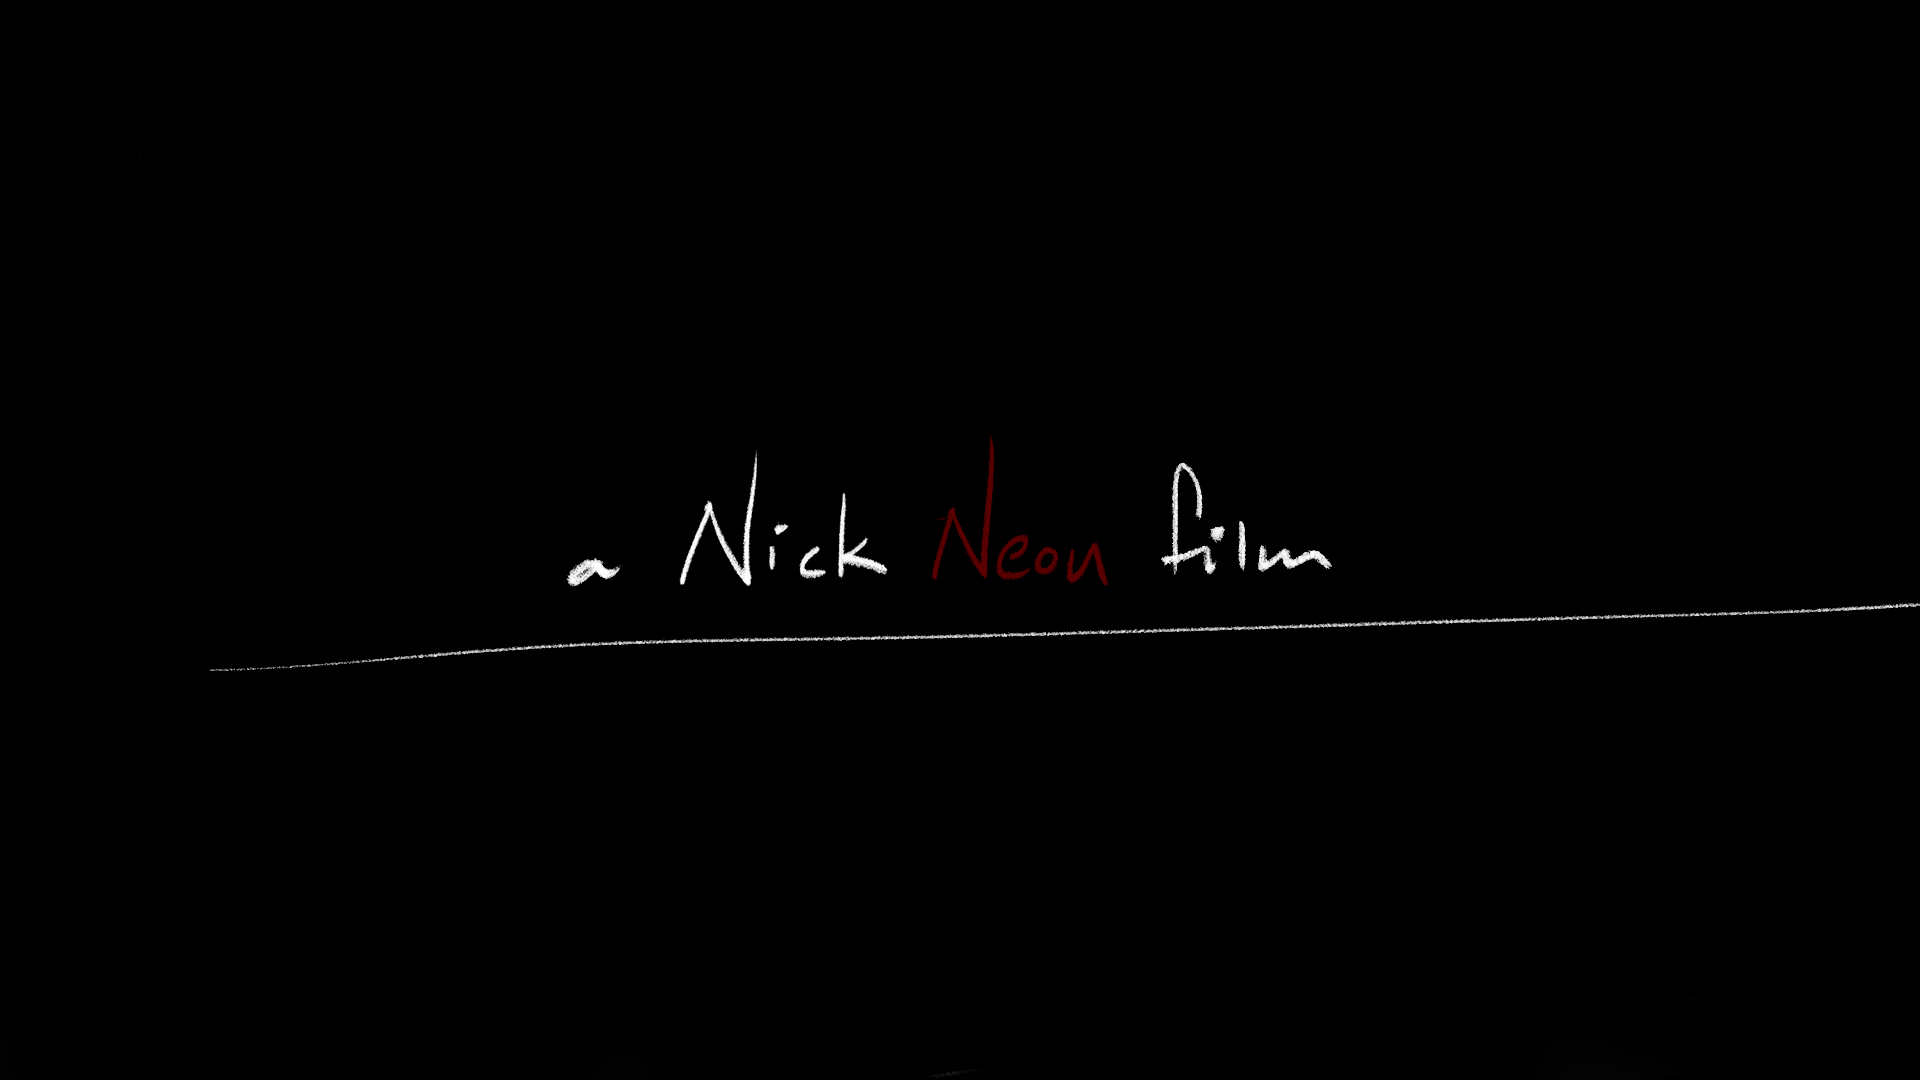 Nick Neon film.jpg